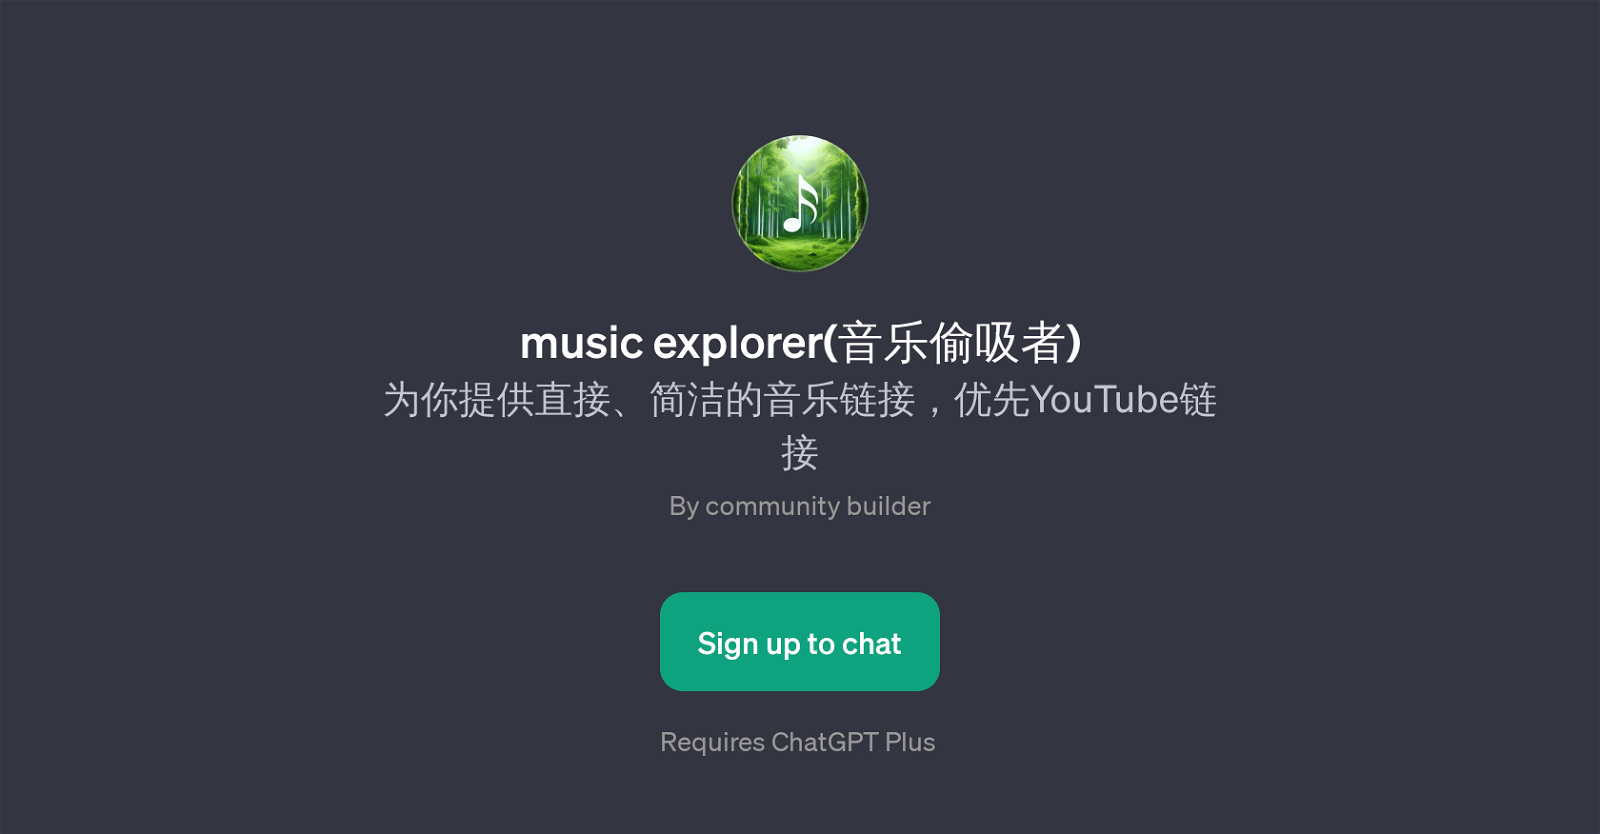 music explorer() website